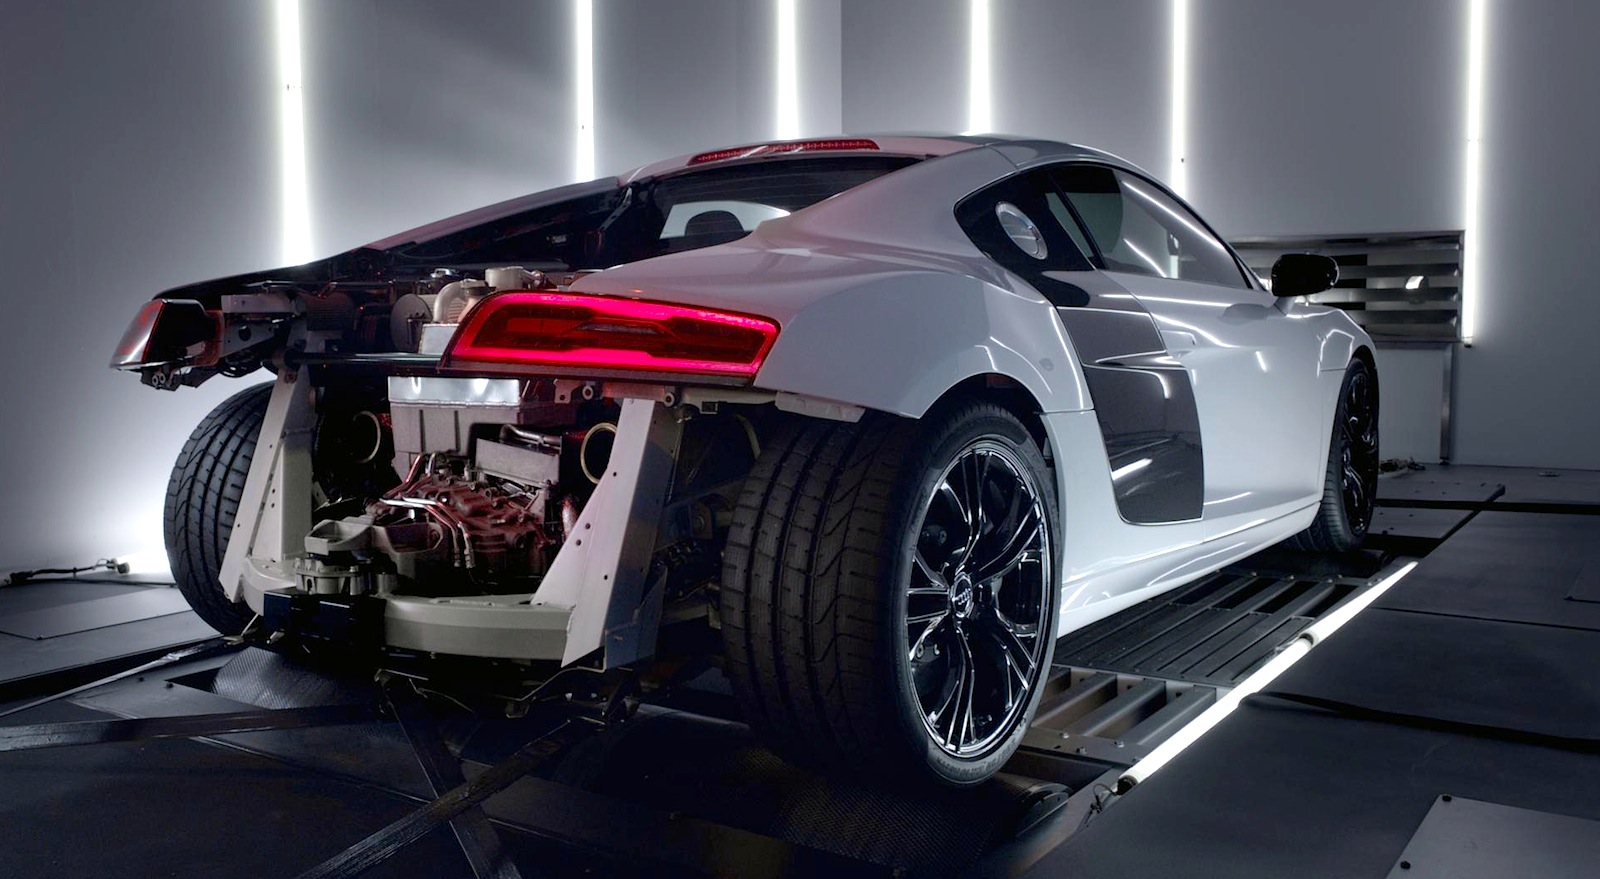 Audi R8 V10 plus: engine revealed and heard - Photos (1 of 4)